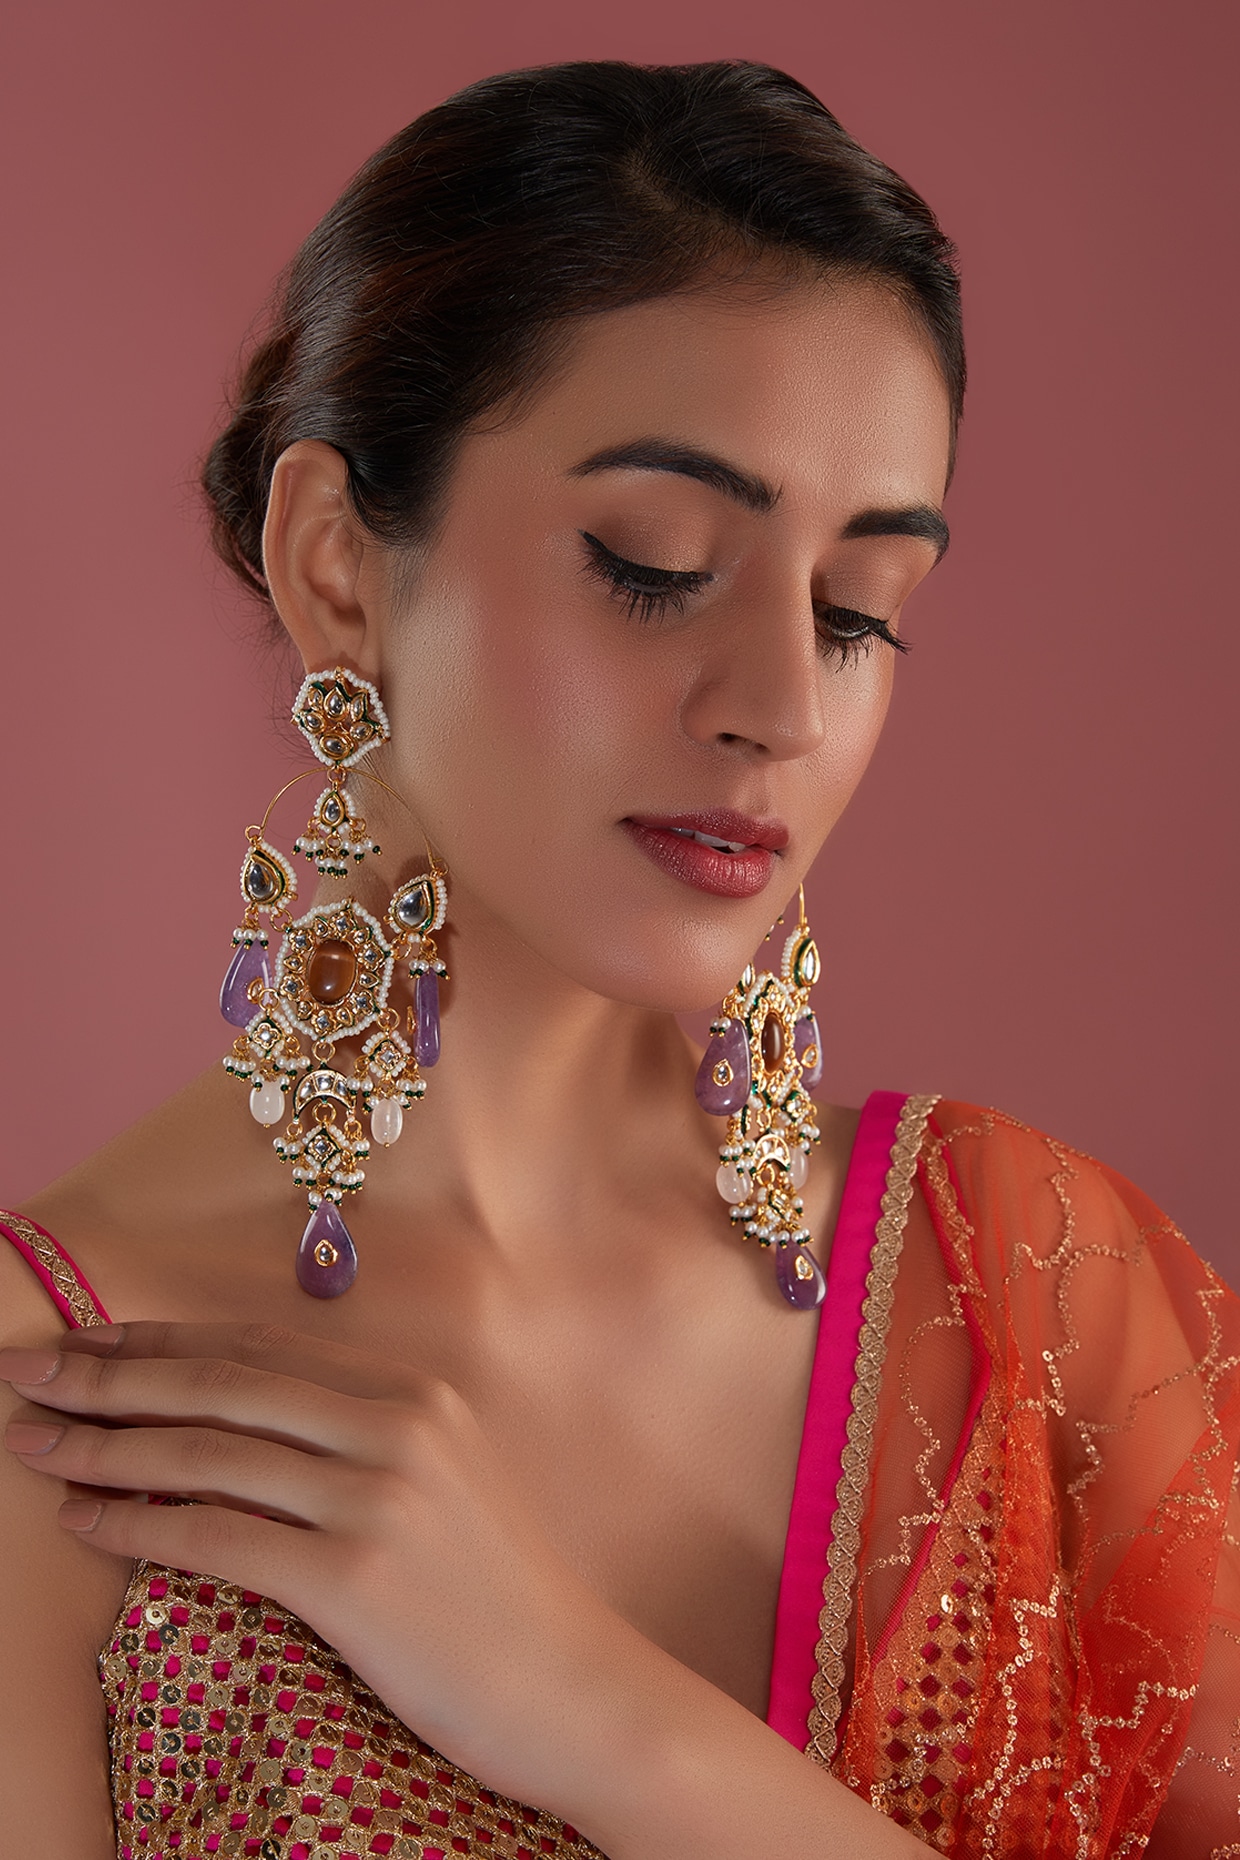 Samantha Akkineni in Diamond Jhumkas - Indian Jewellery Designs